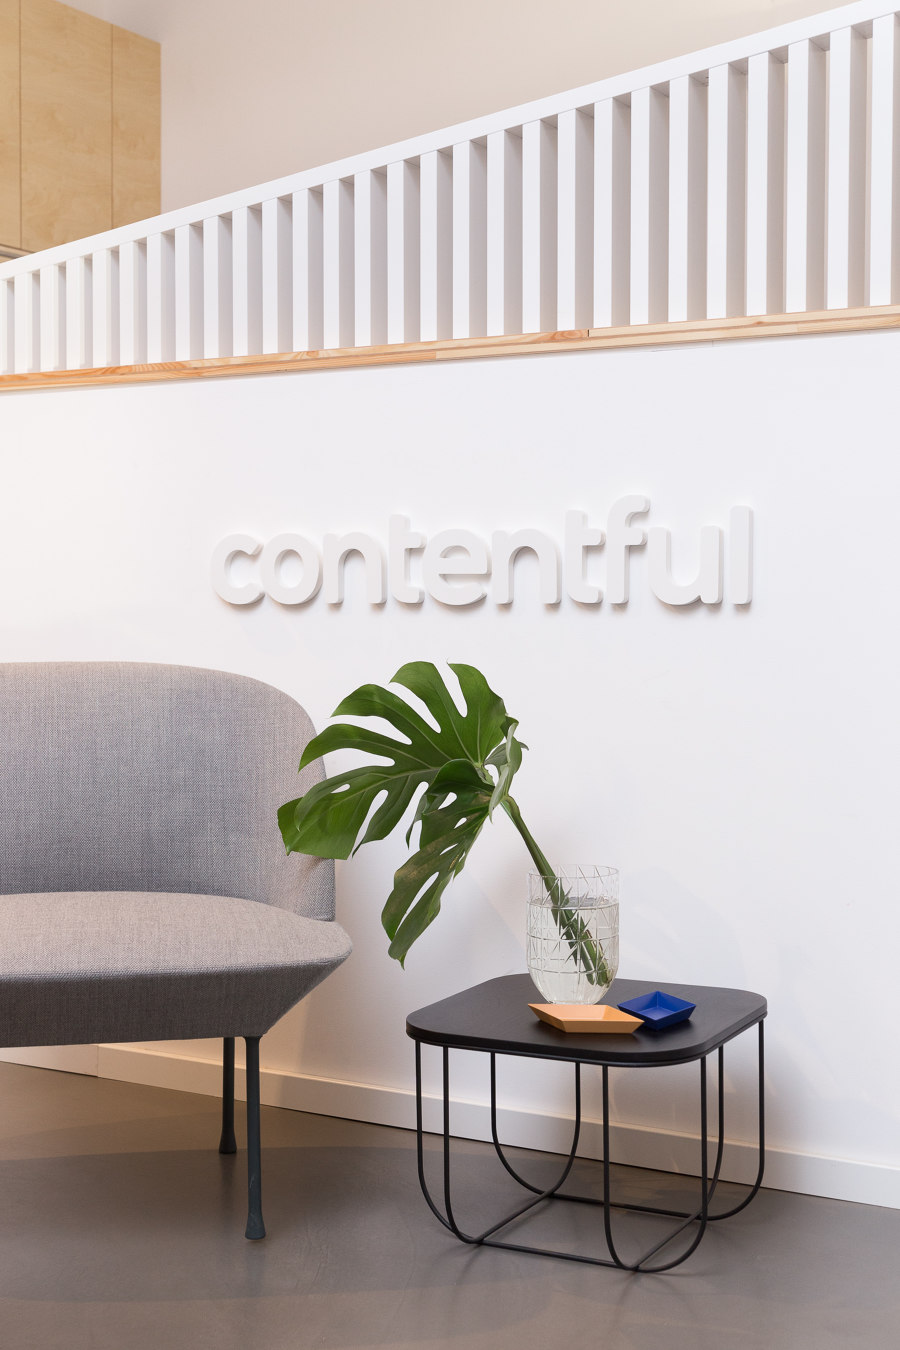 Contentful by toi toi toi creative studio | Office facilities